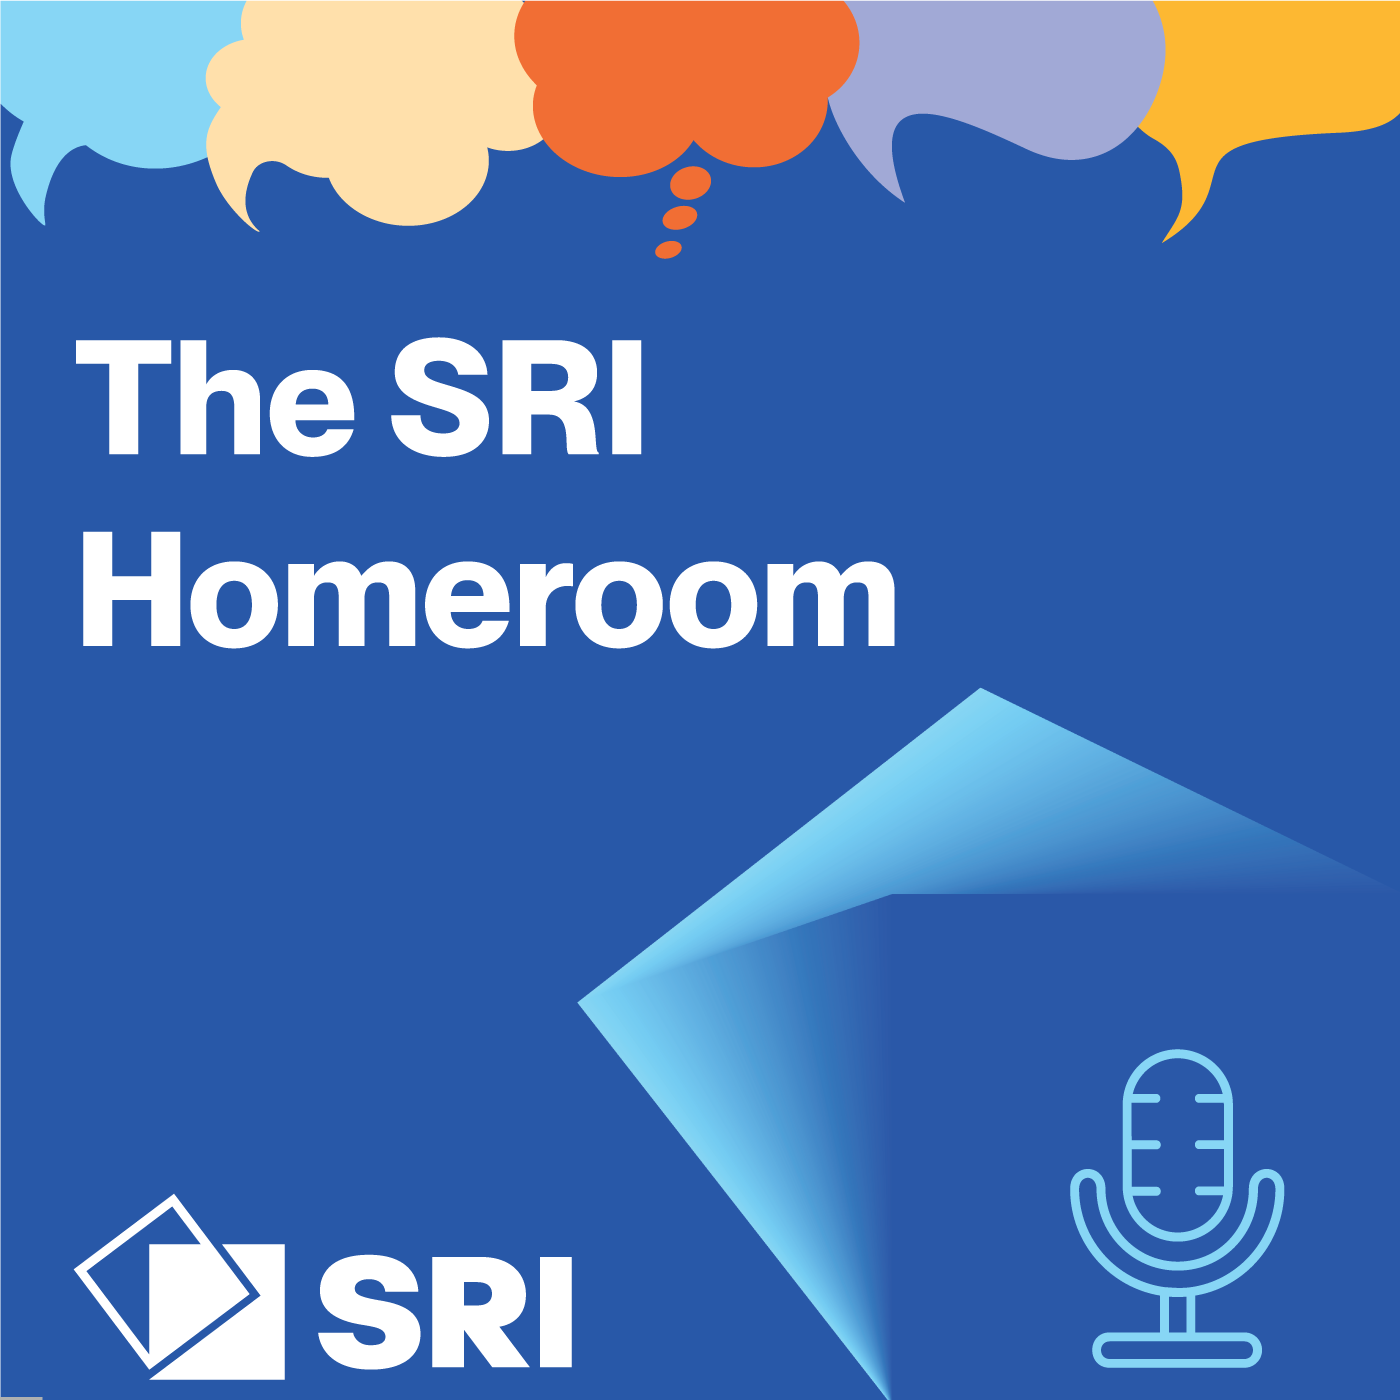 The SRI Homeroom logo